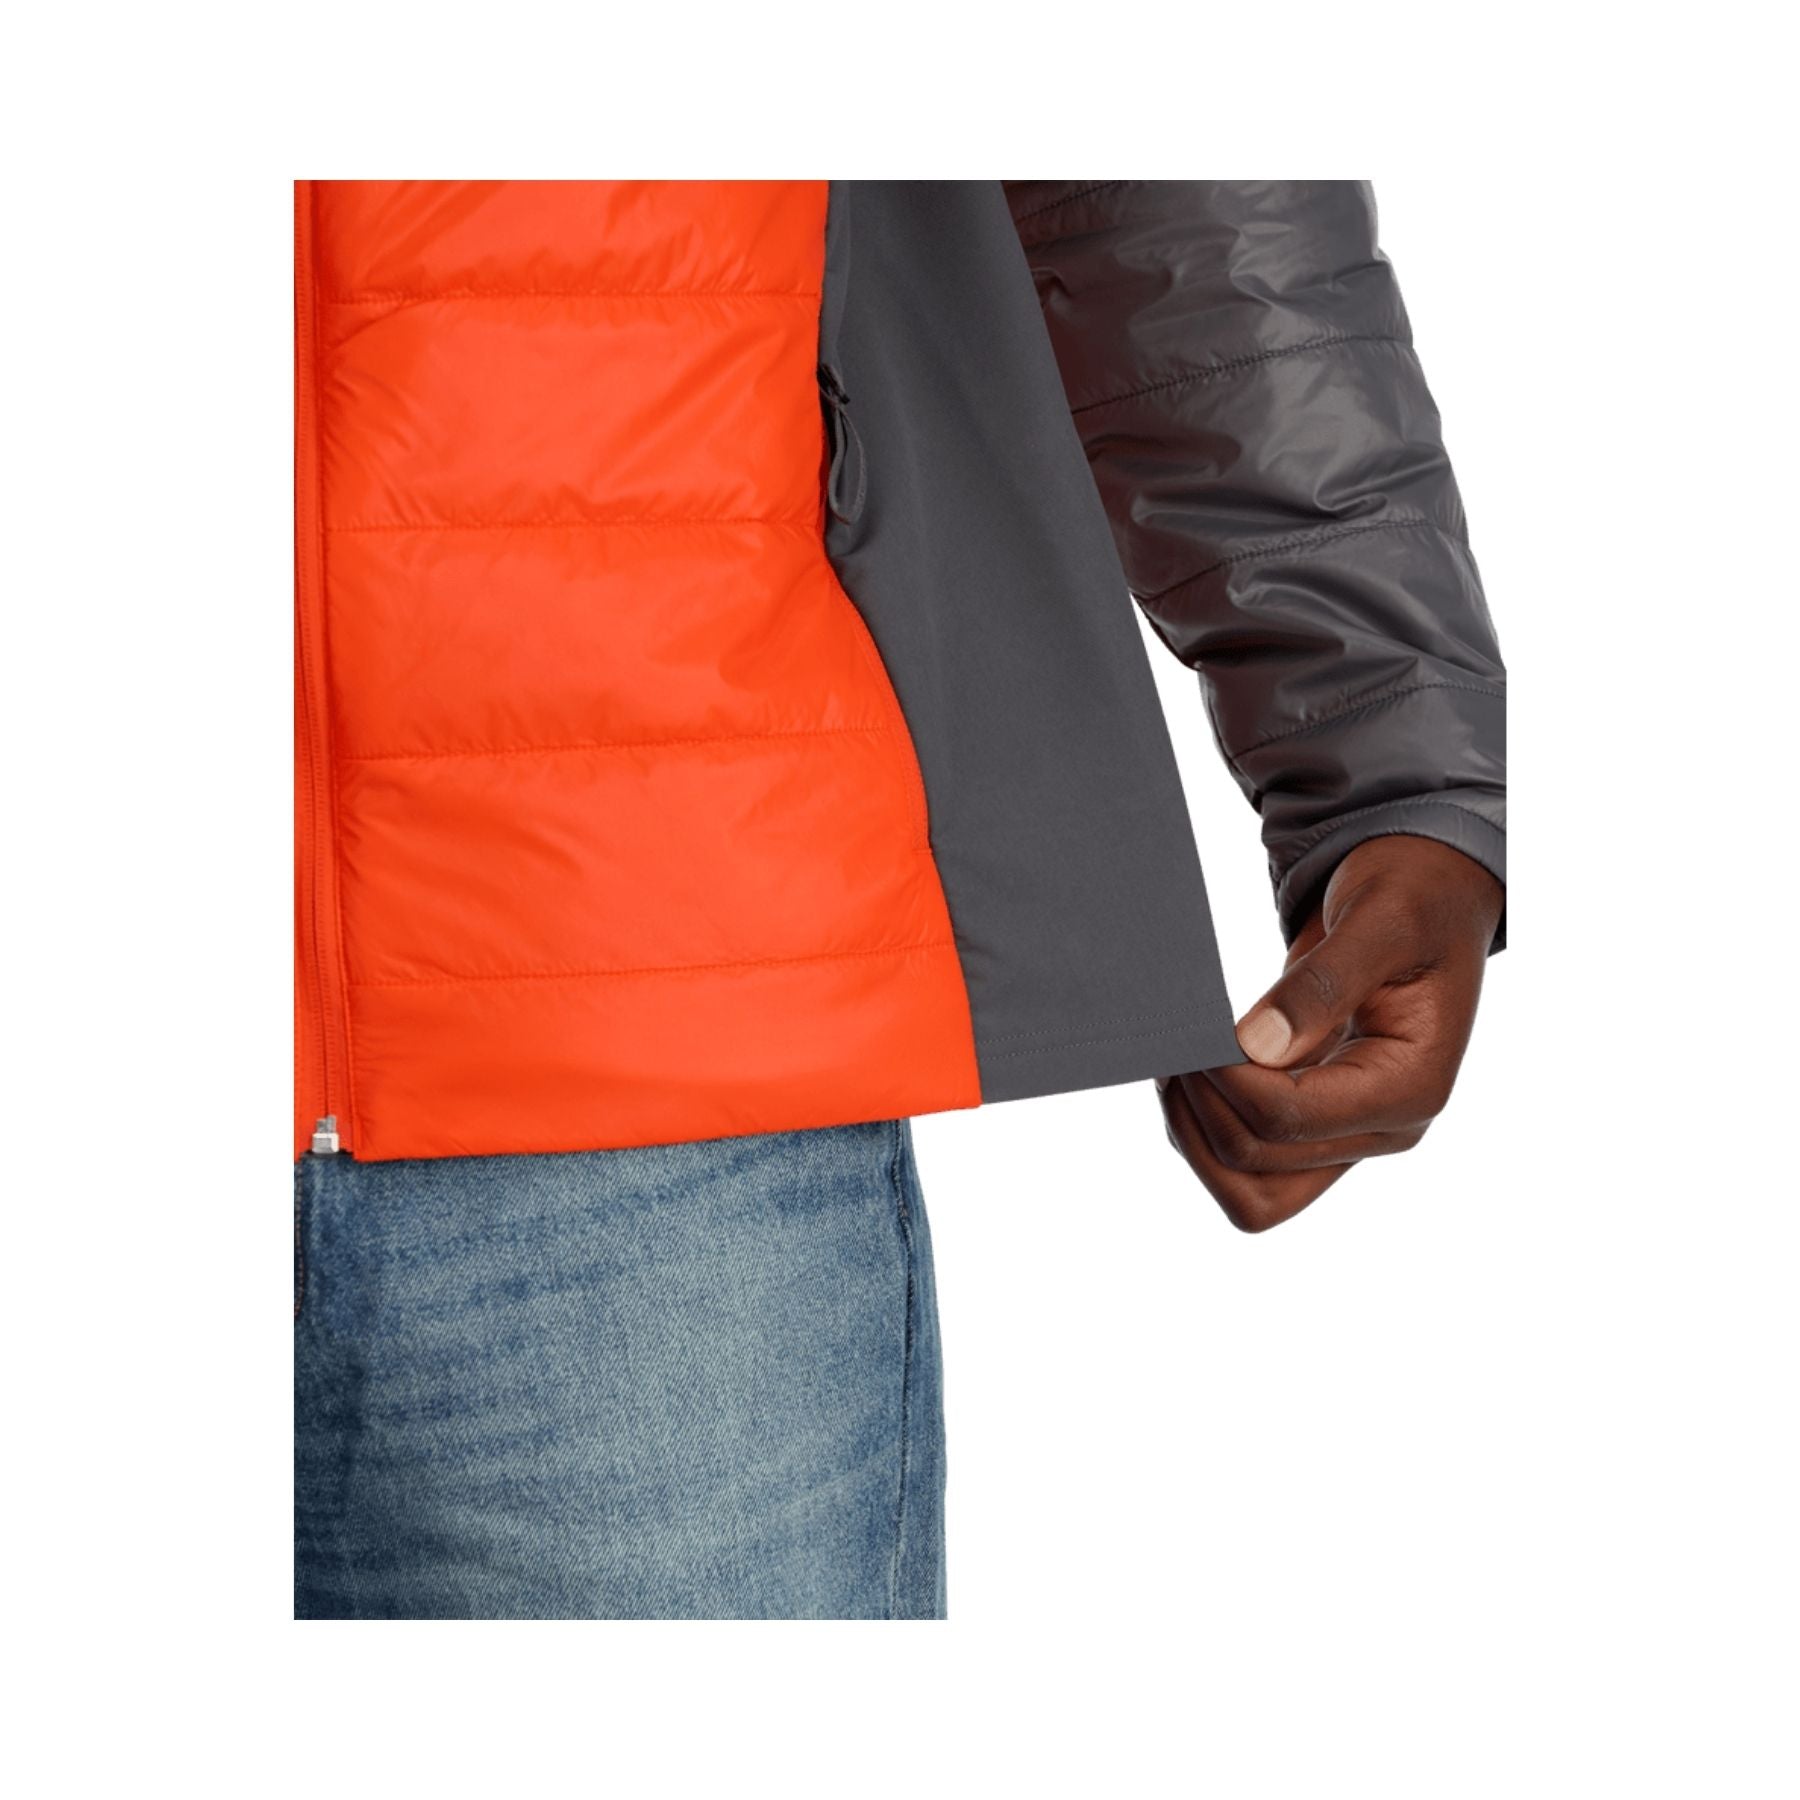 Spyder Glissade Jacket in Twisted Orange